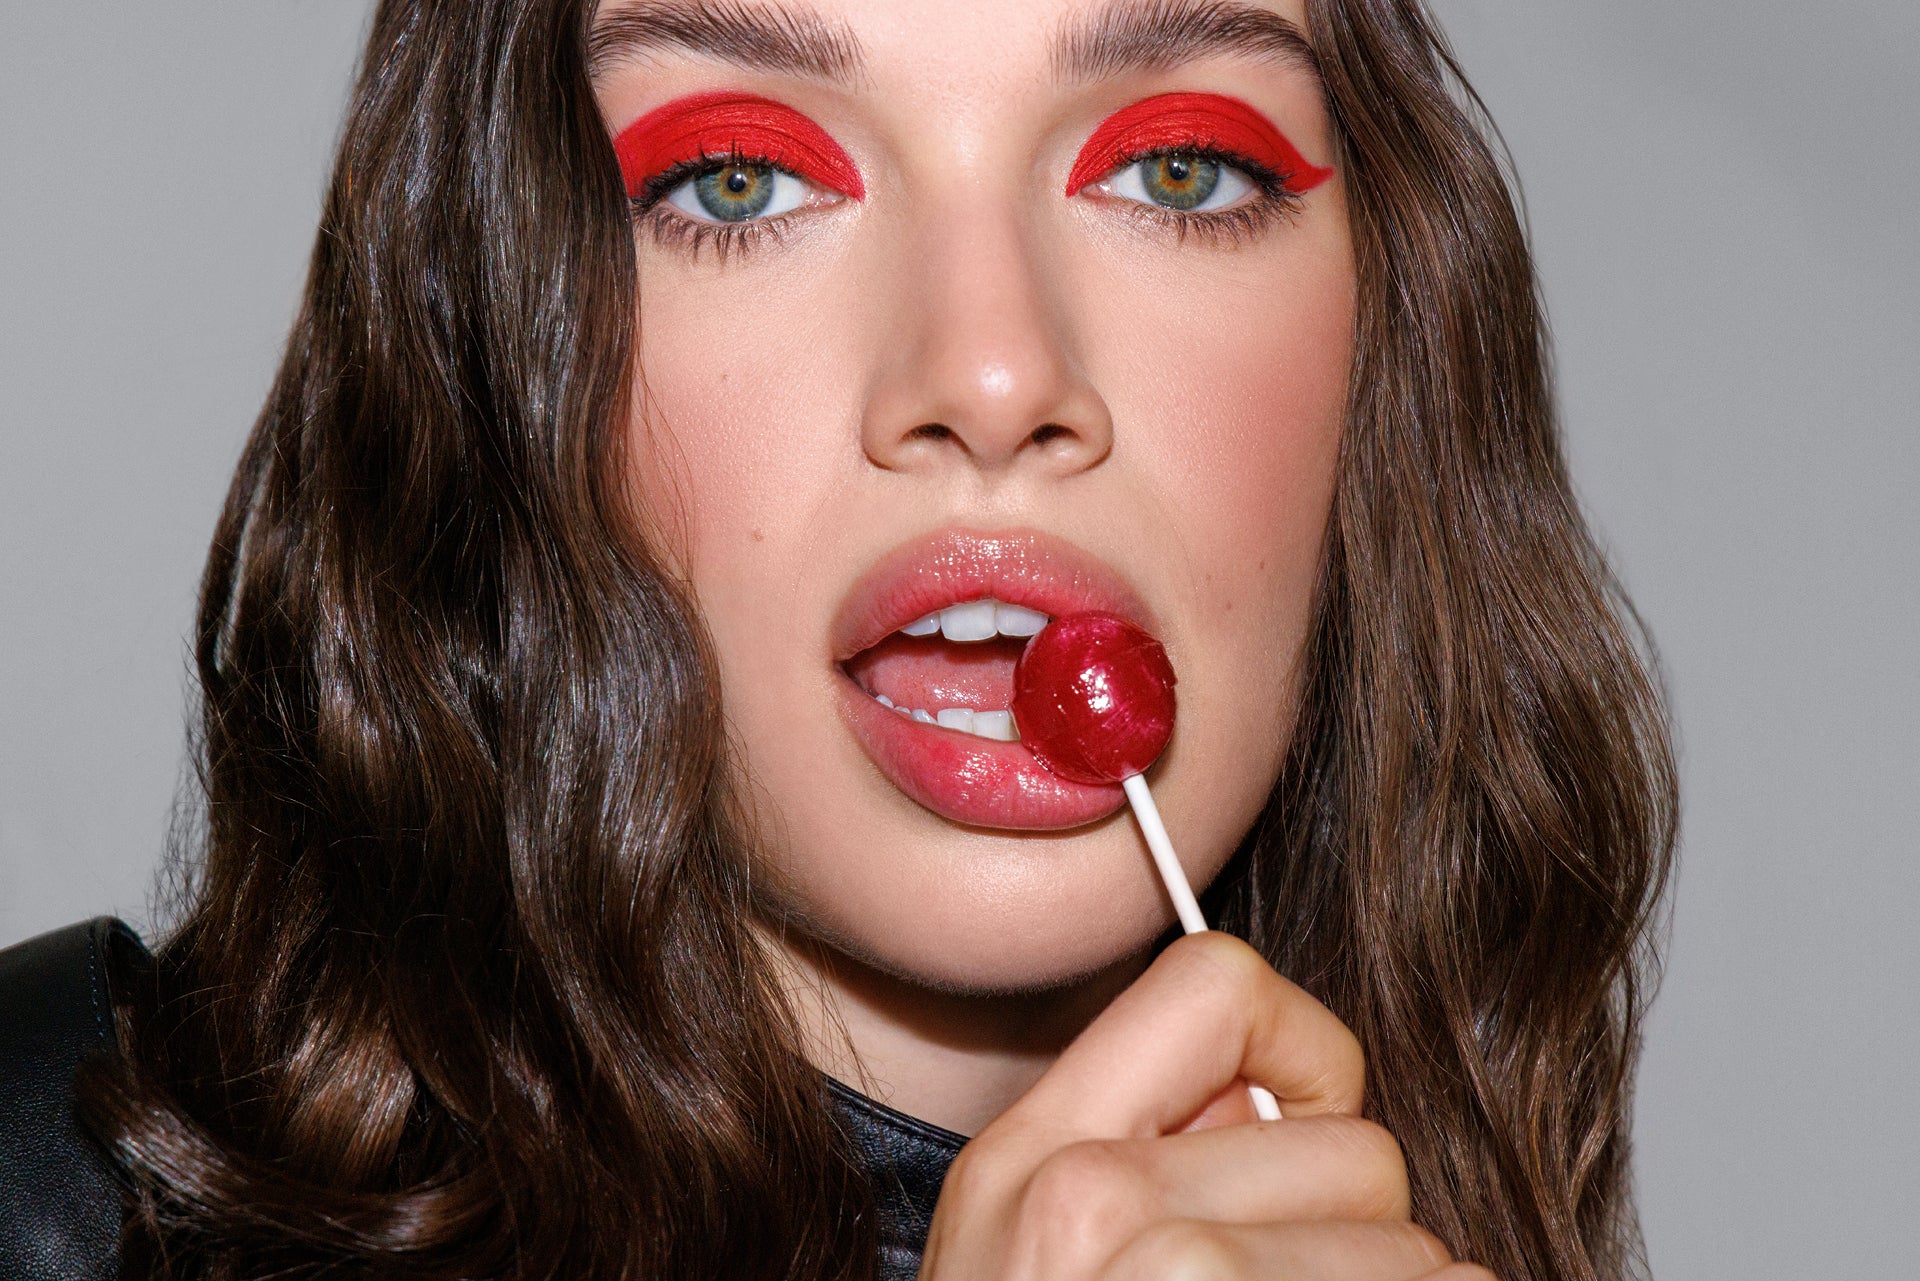 5 Benefits of Eating a Lollipop